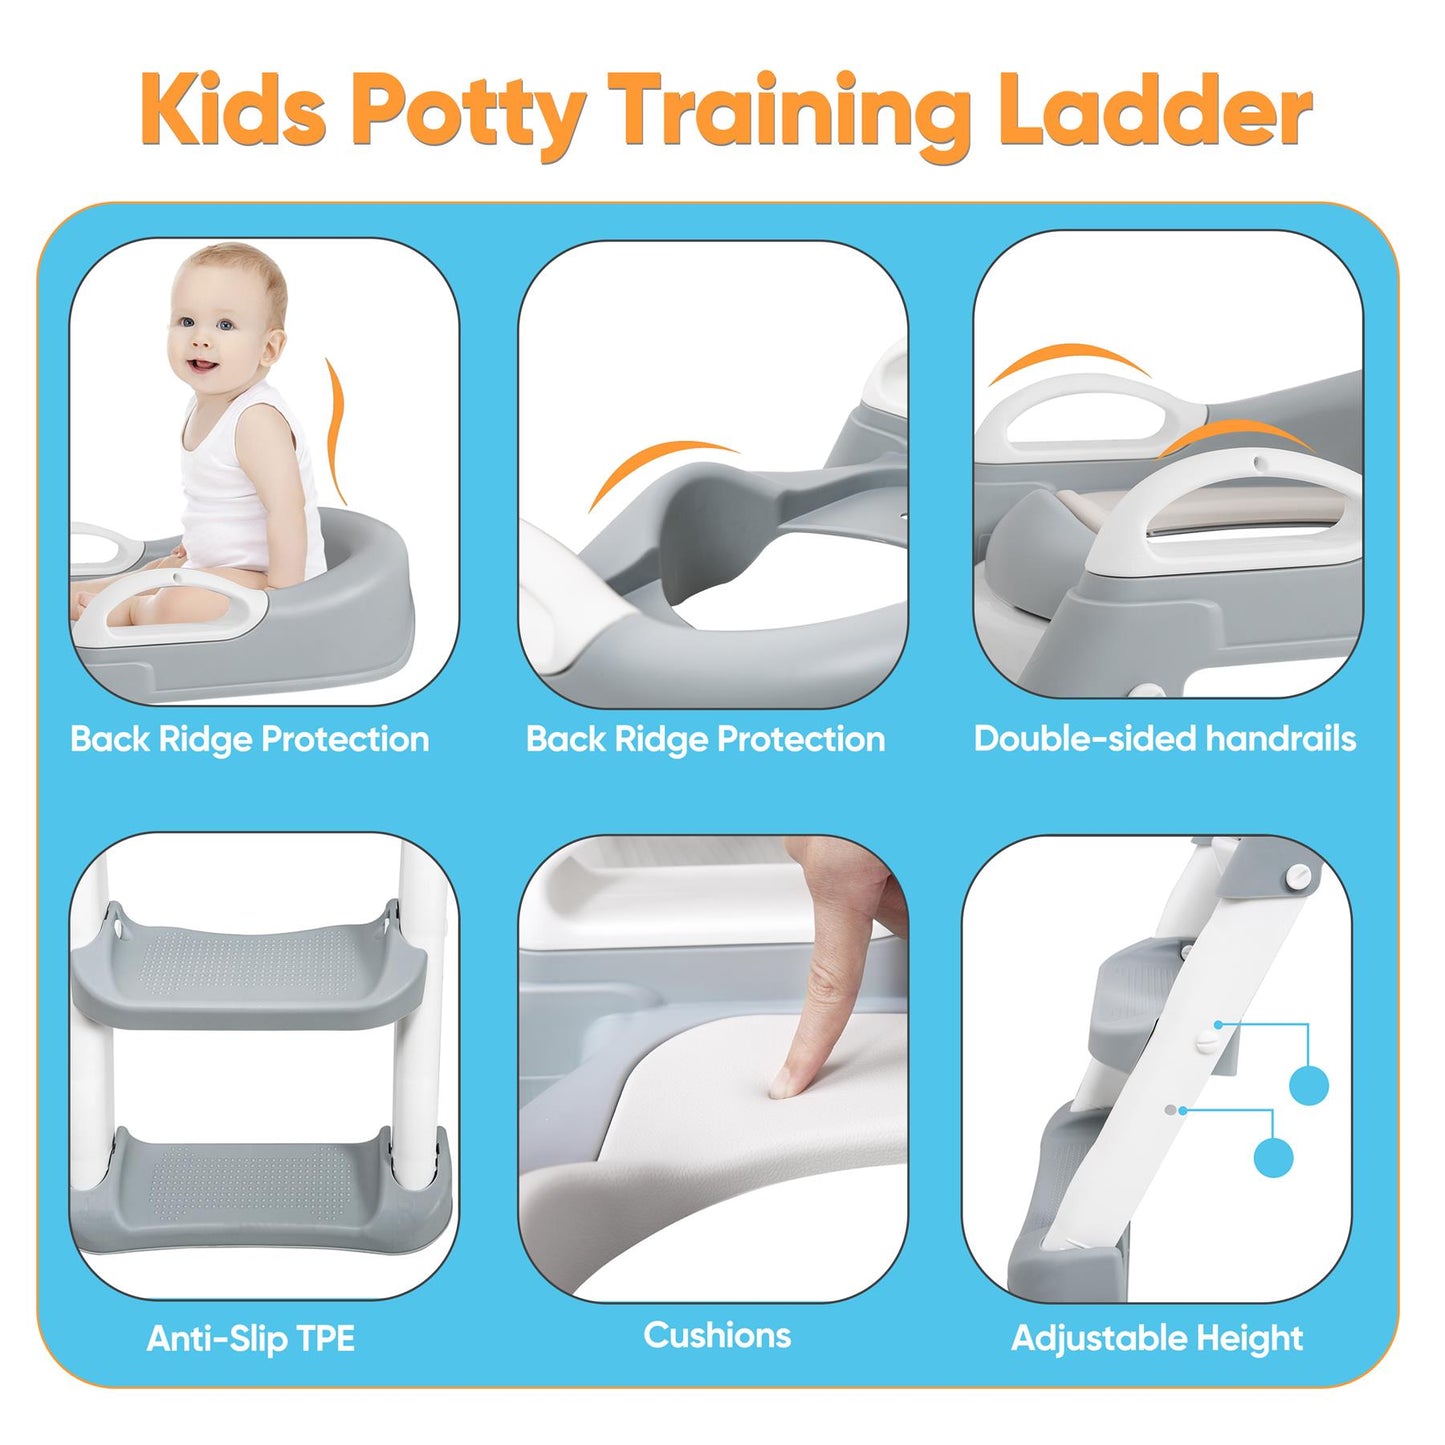 Make Potty Training Fun with a Ladder